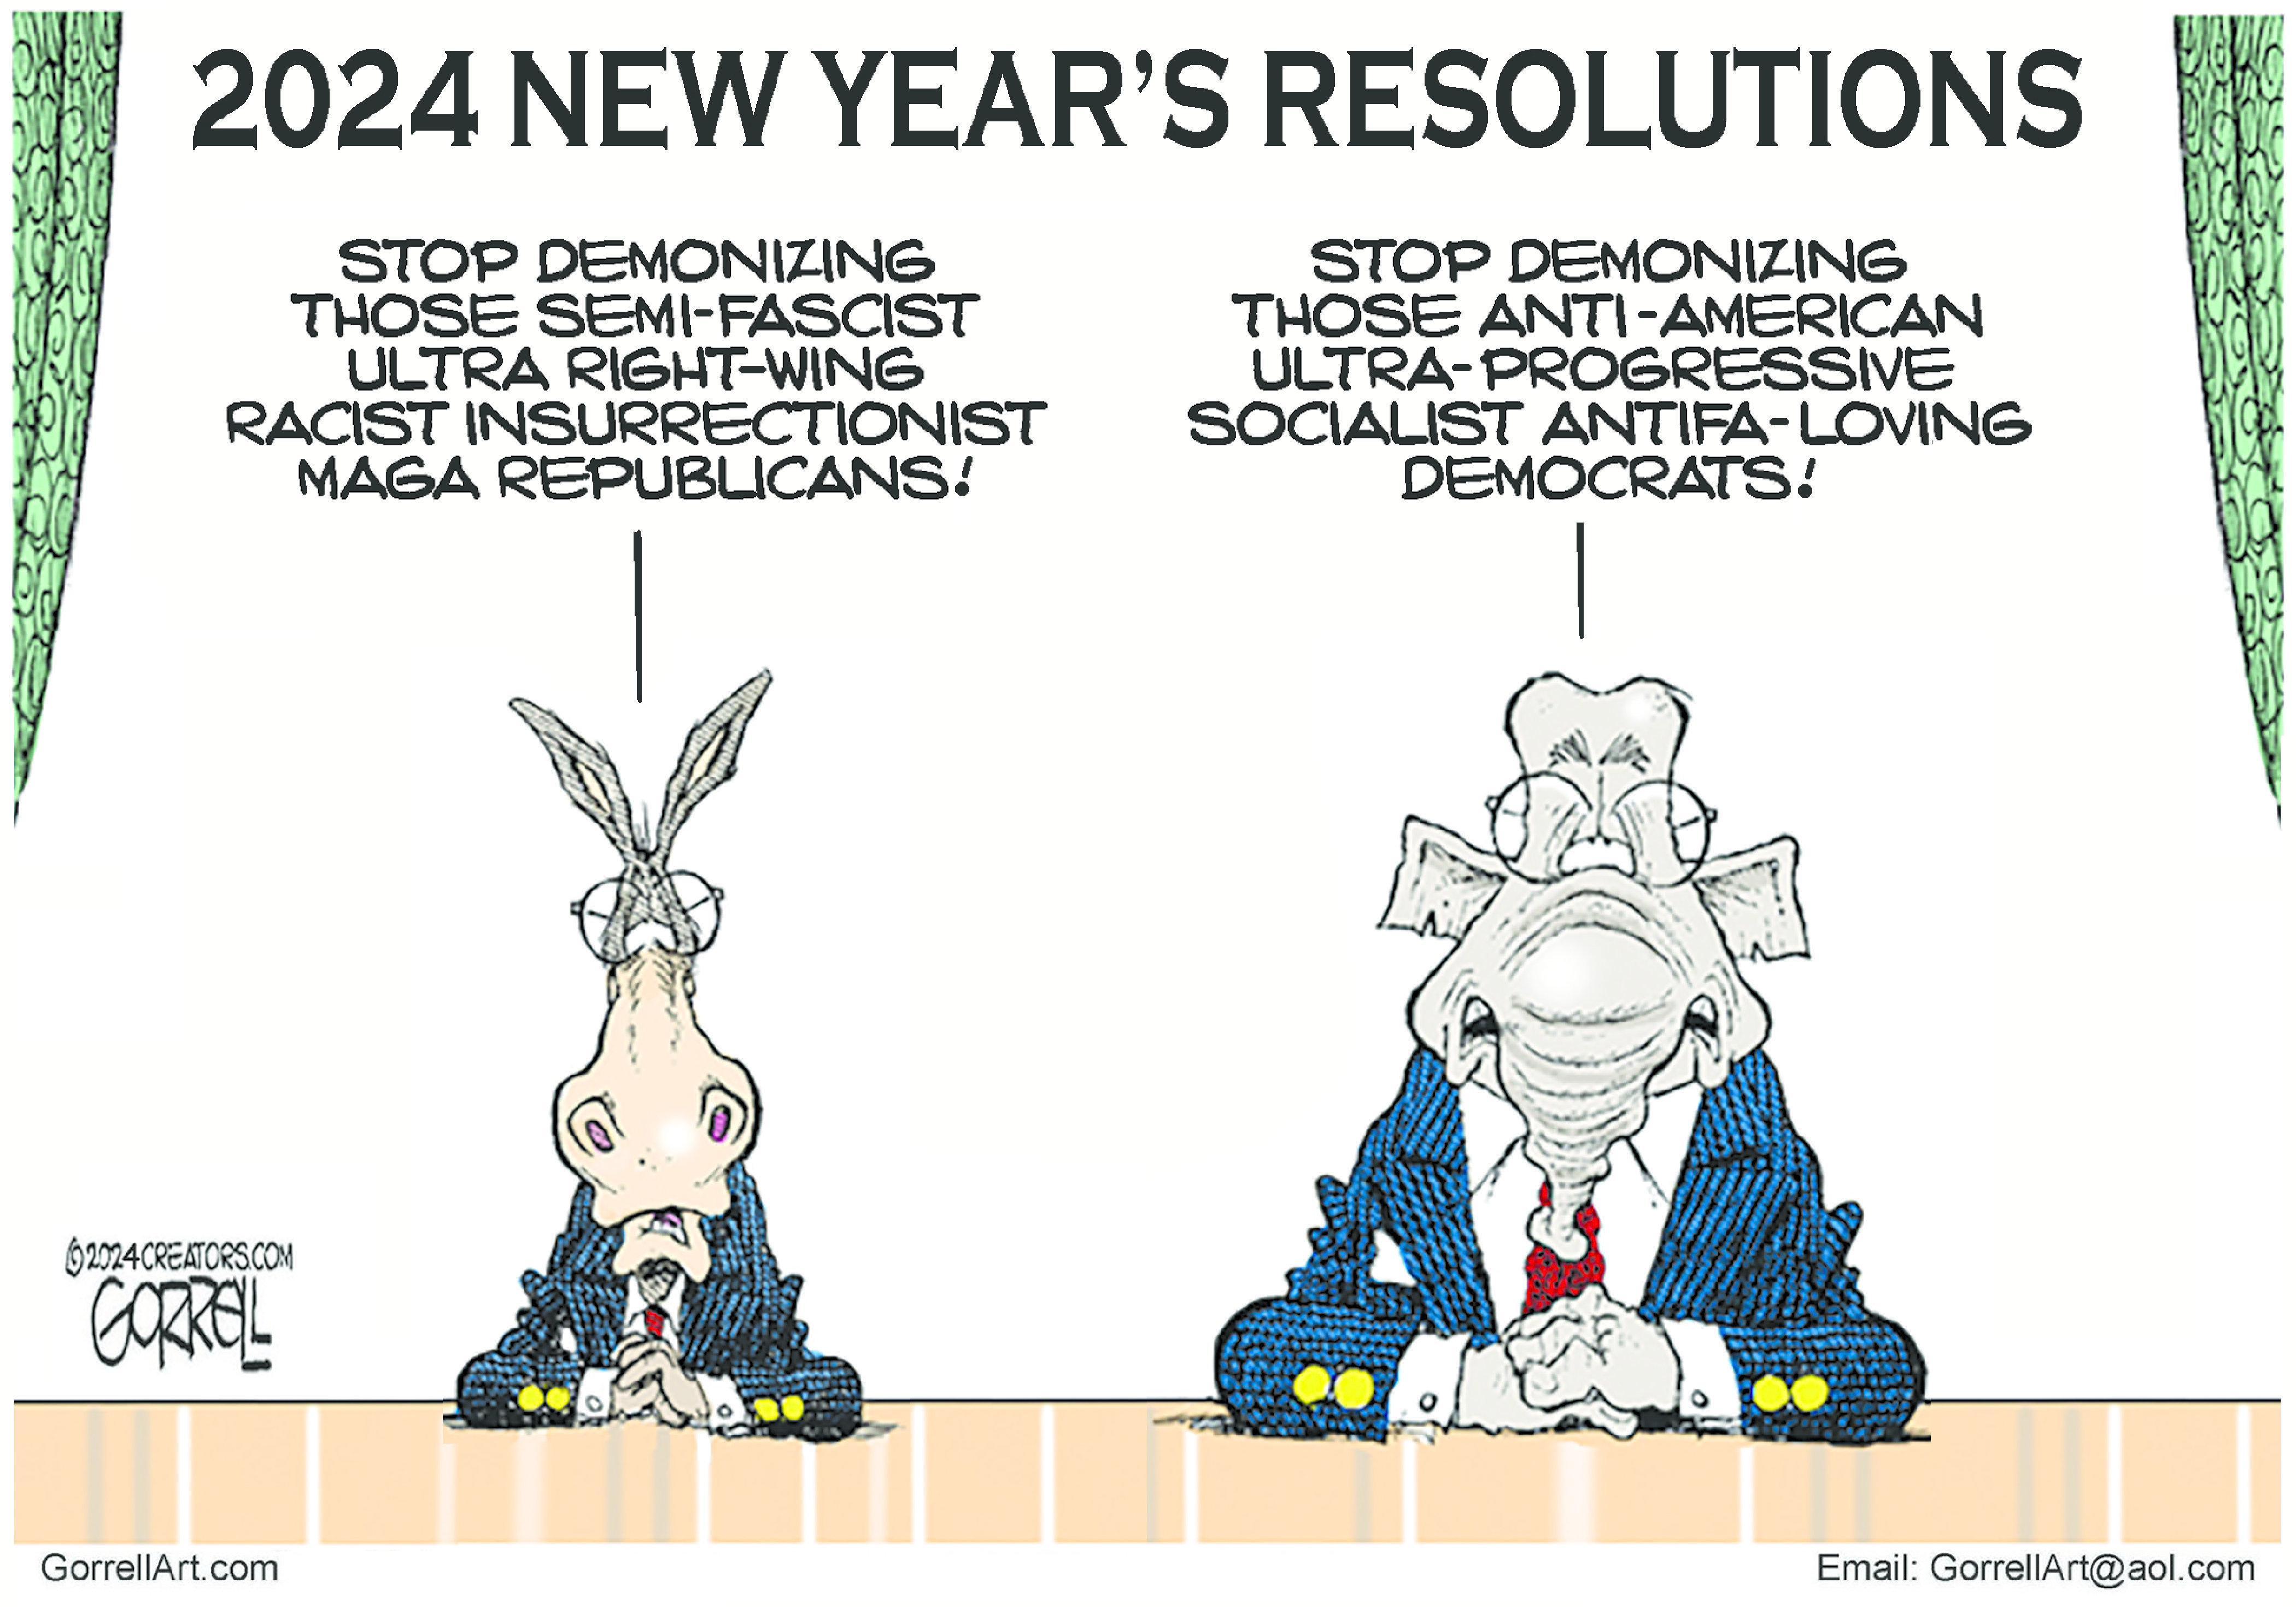  Today's political cartoons - January 2, 2024 